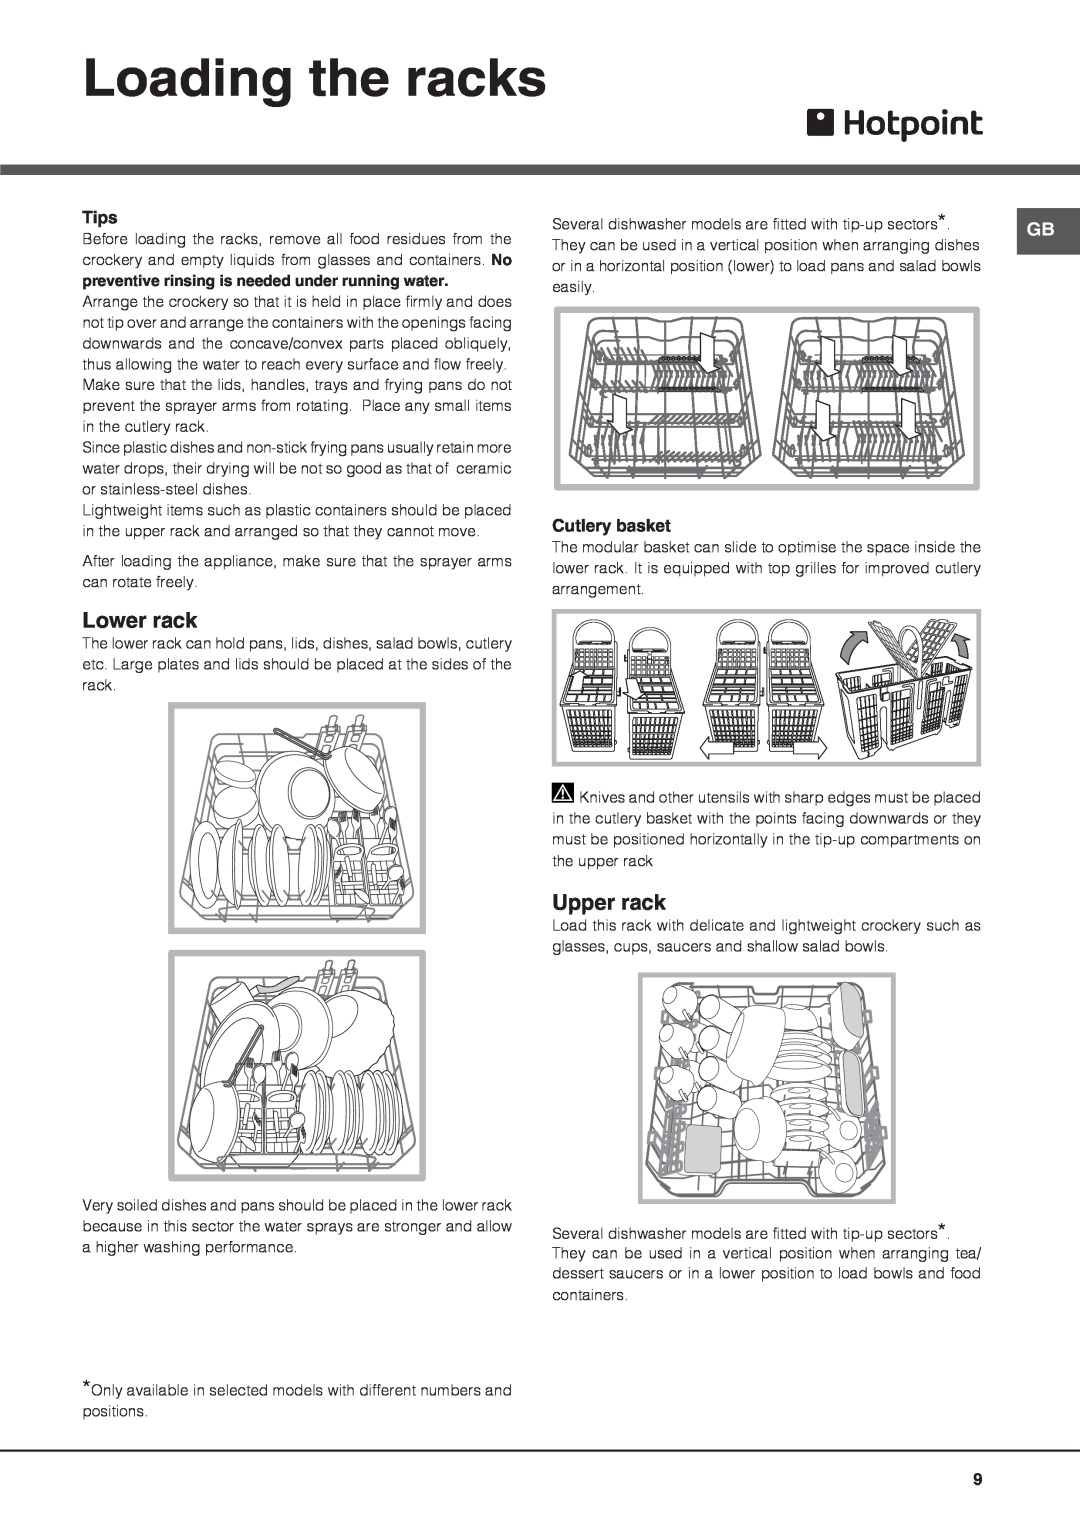 Hotpoint FDUD 43133, ULTIMA manual Loading the racks, Lower rack, Upper rack, Tips, Cutlery basket 